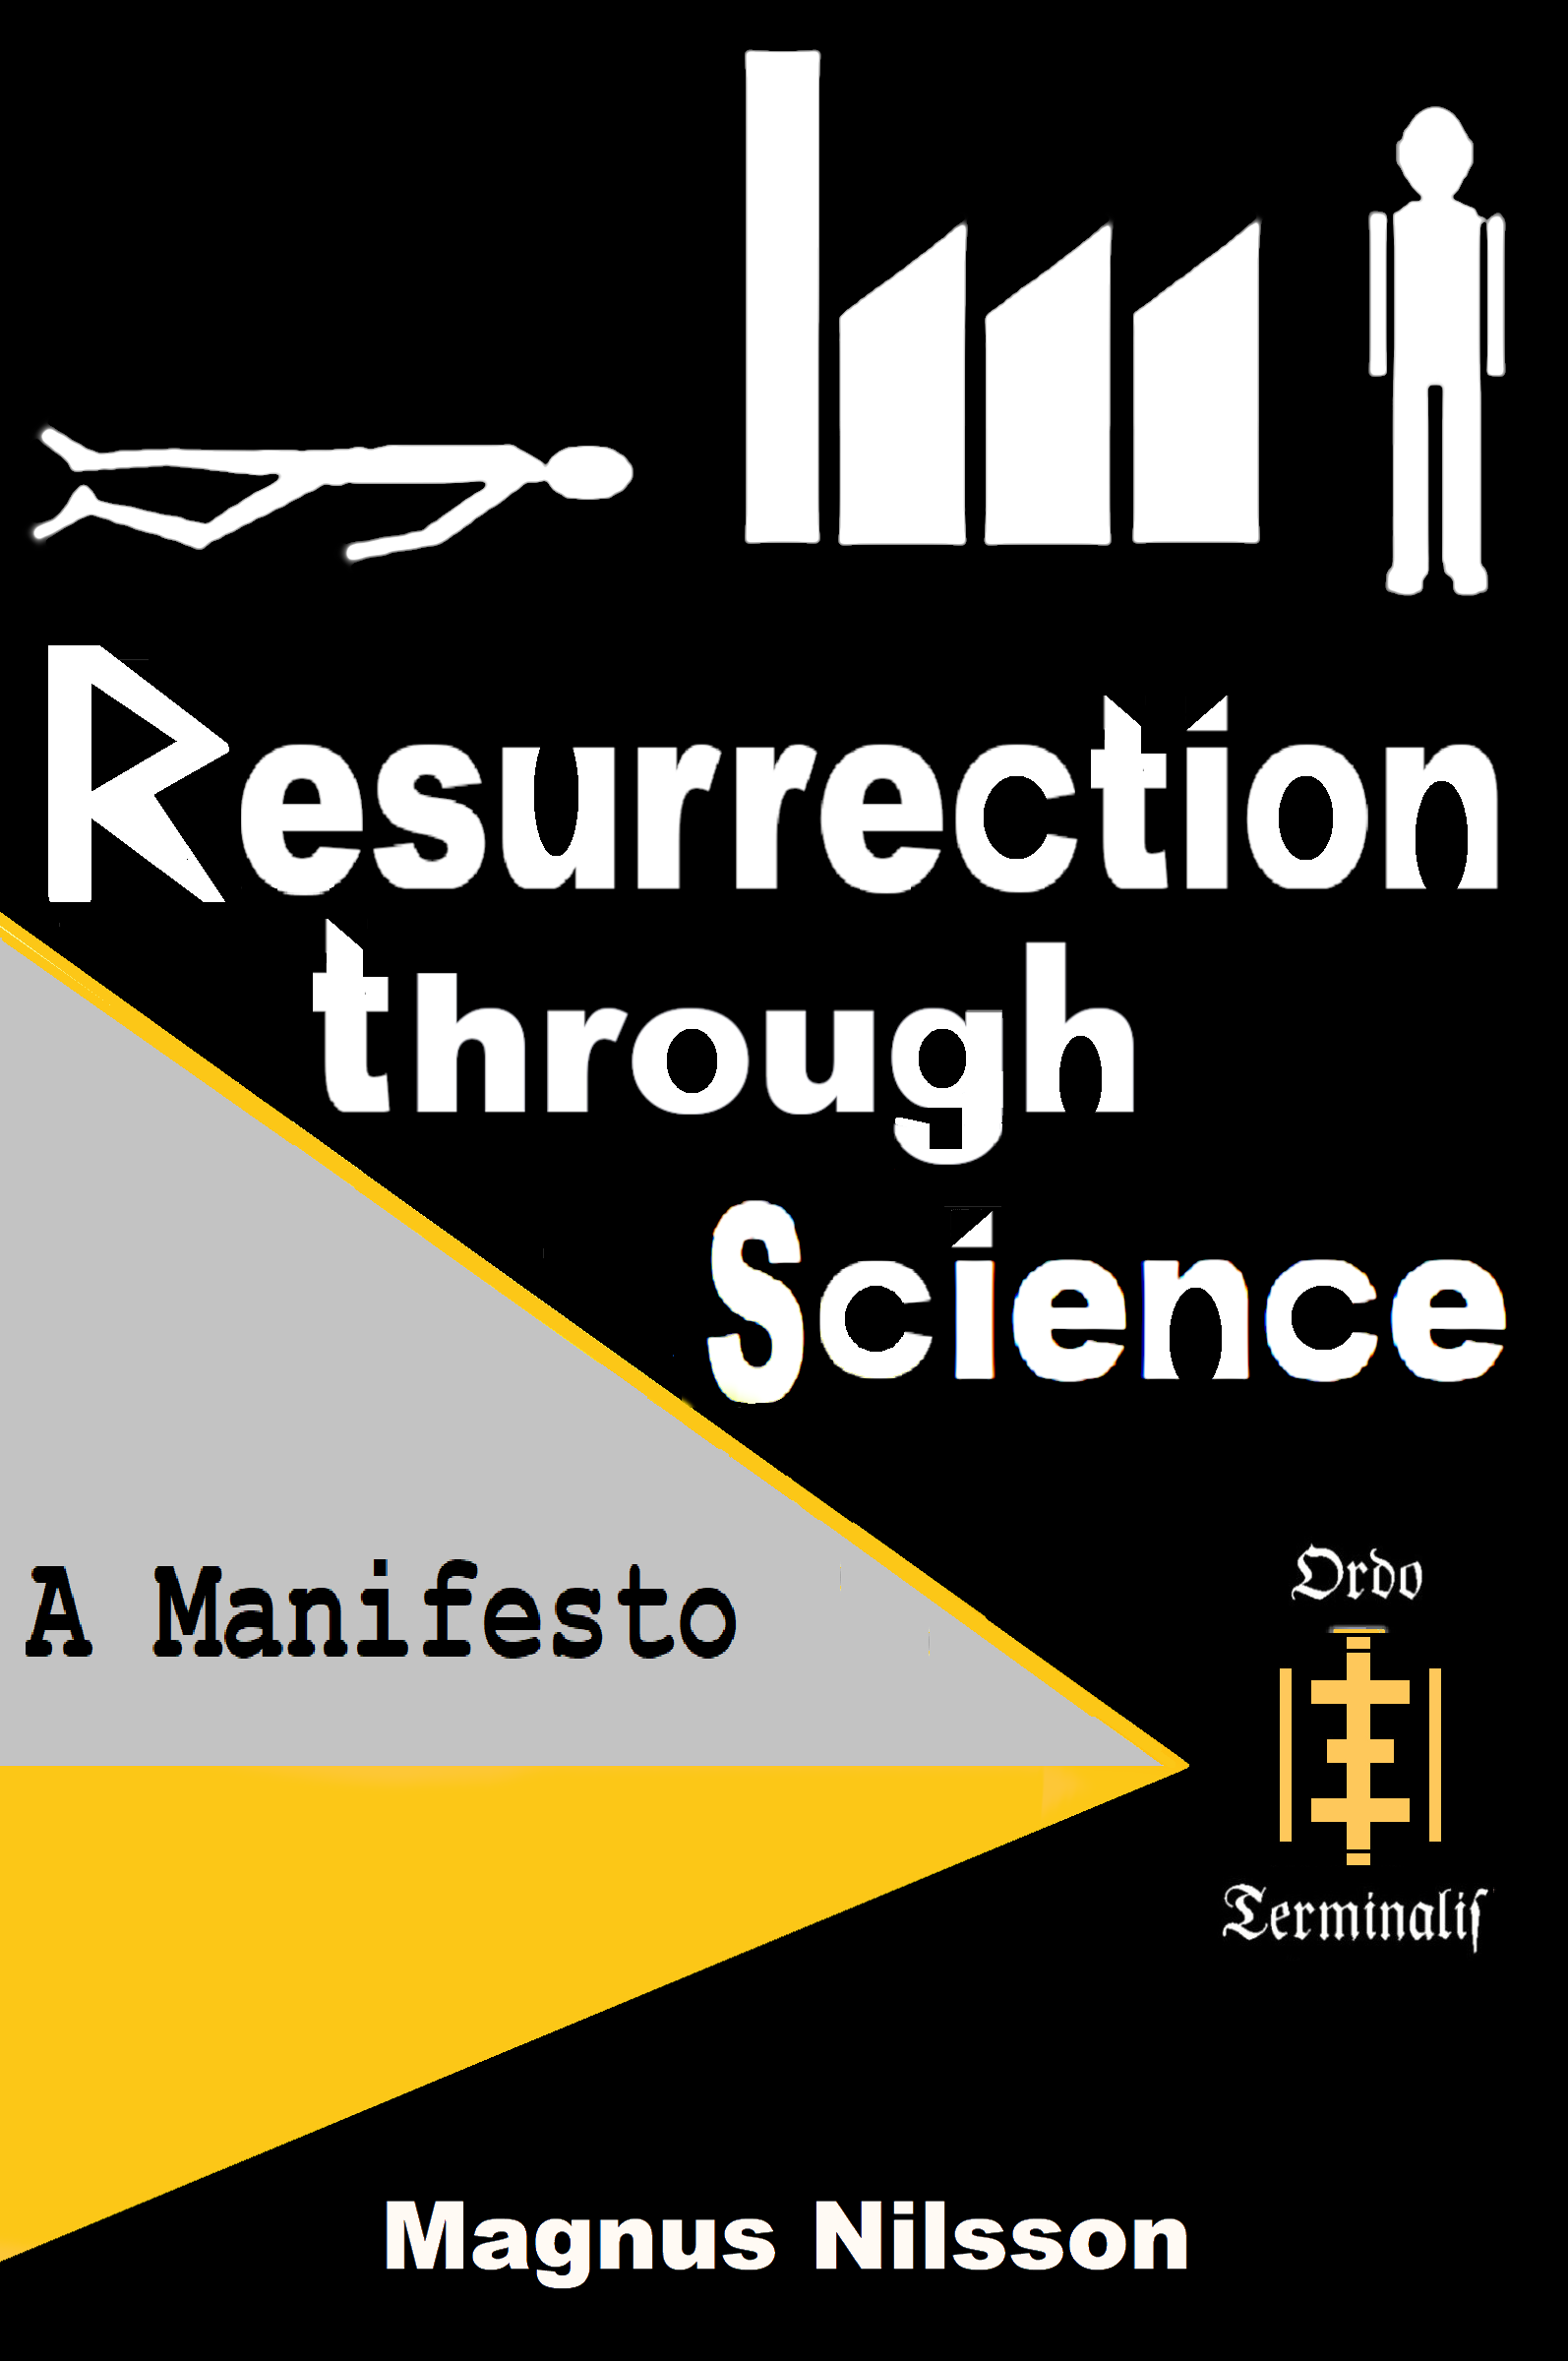 Cover of Manifesto